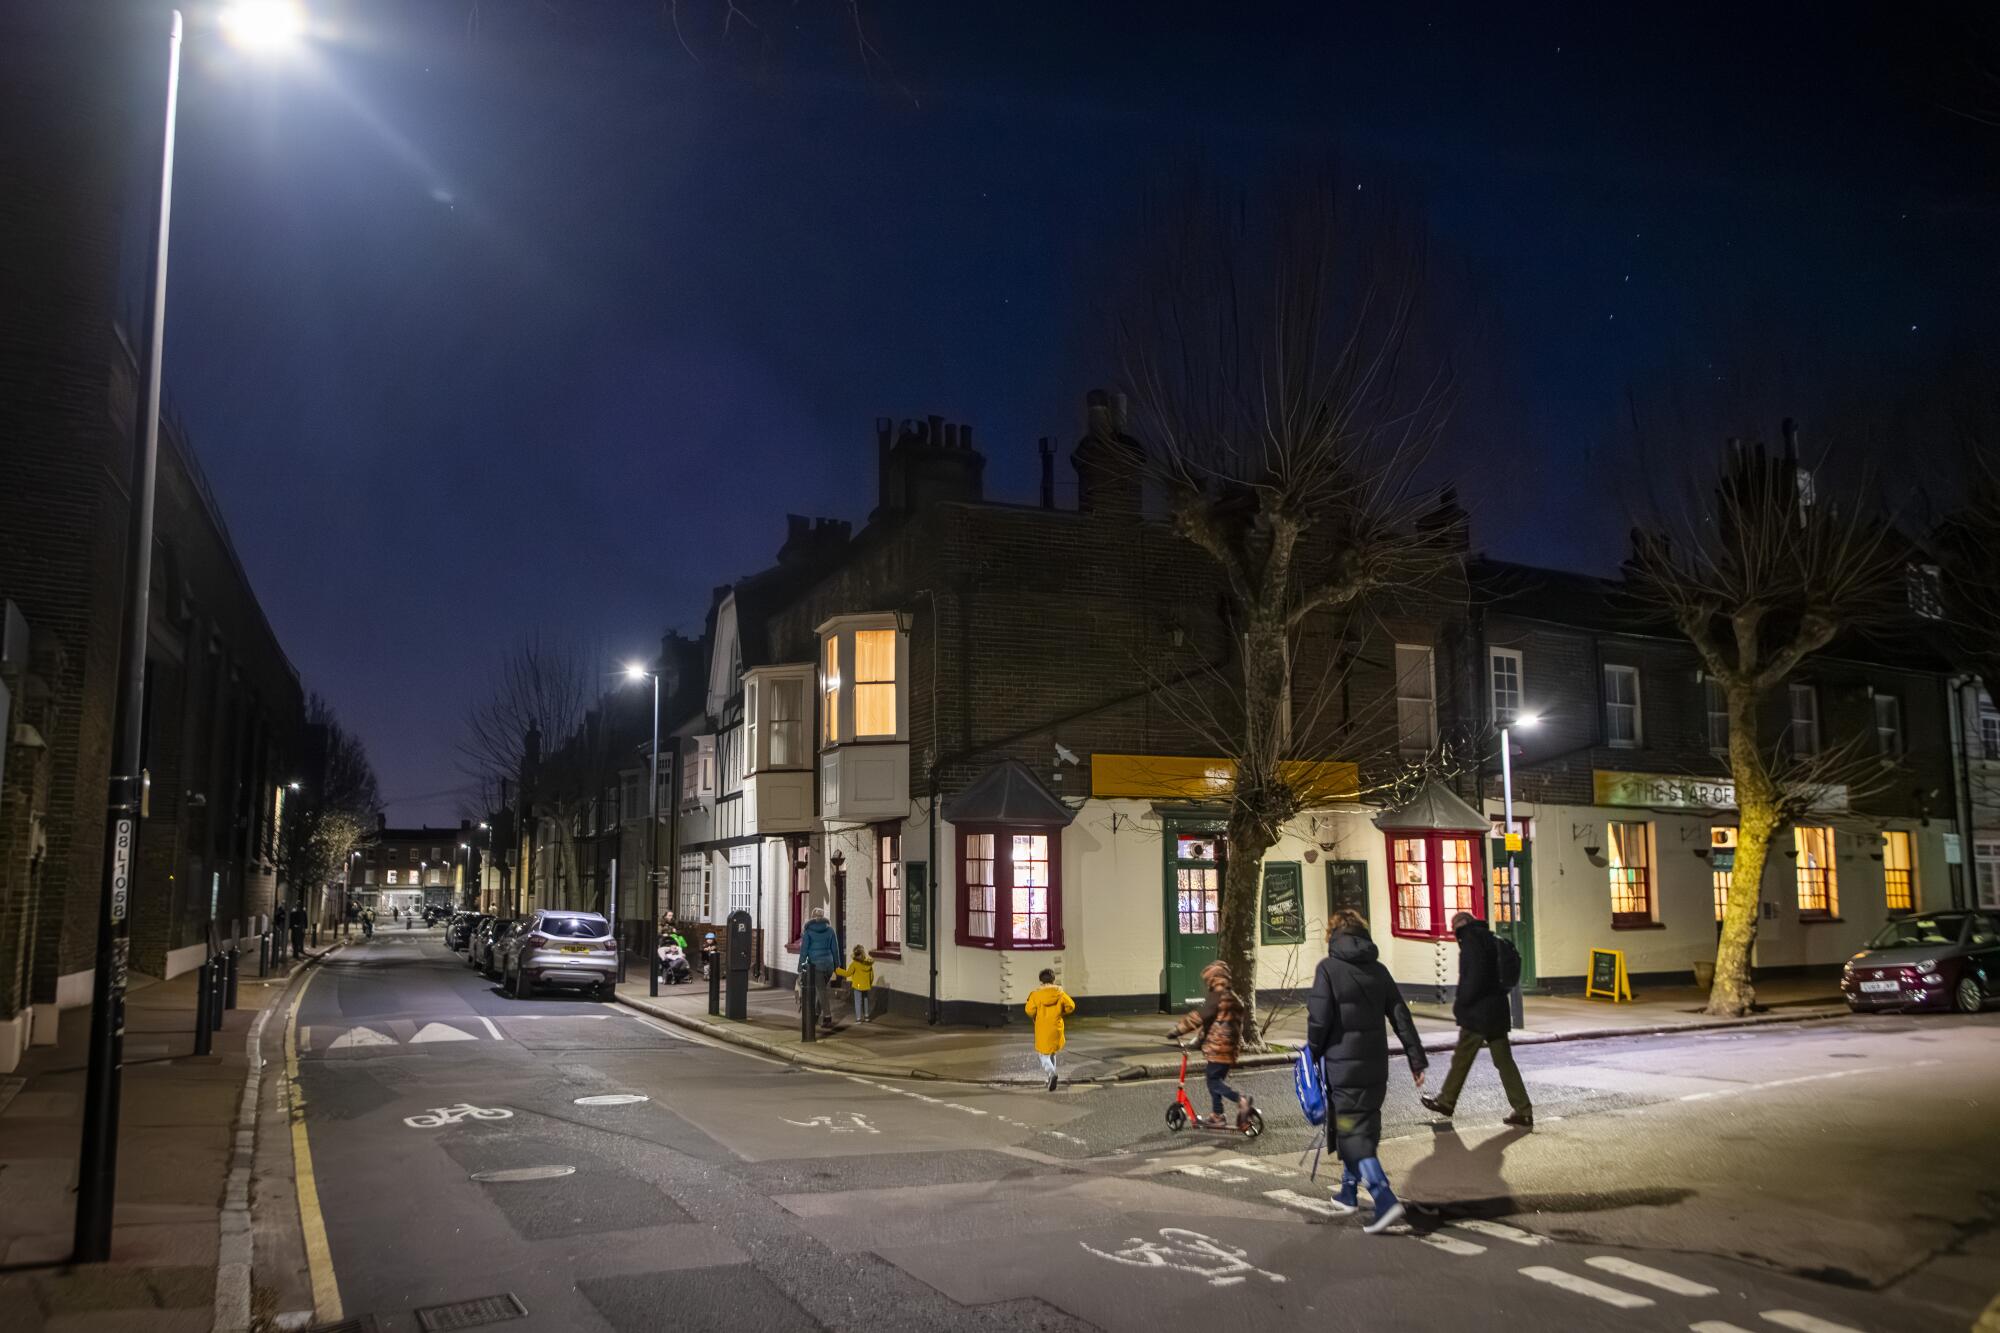 Street scene of an illuminated pub with people walking at night 